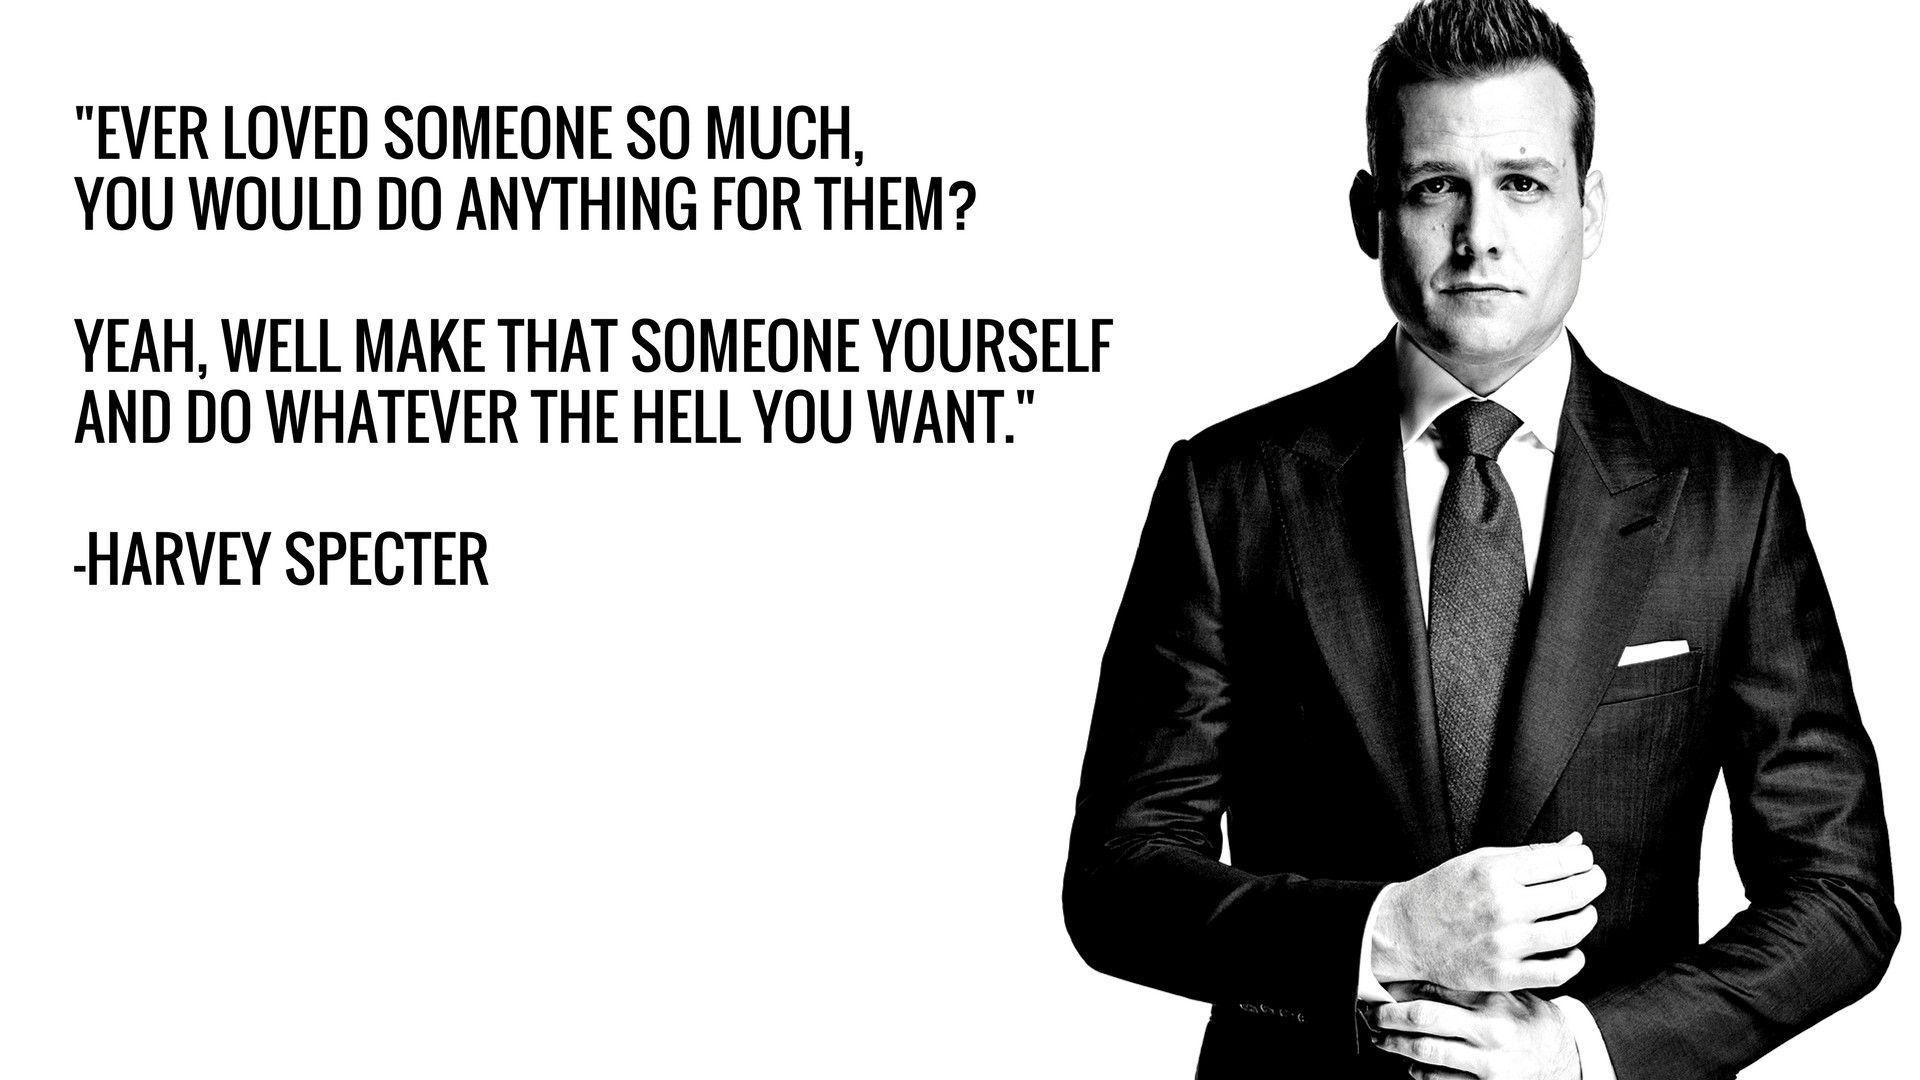 Harvey Specter Wallpaper. Harvey specter, Loving someone quotes, Harvey specter quotes